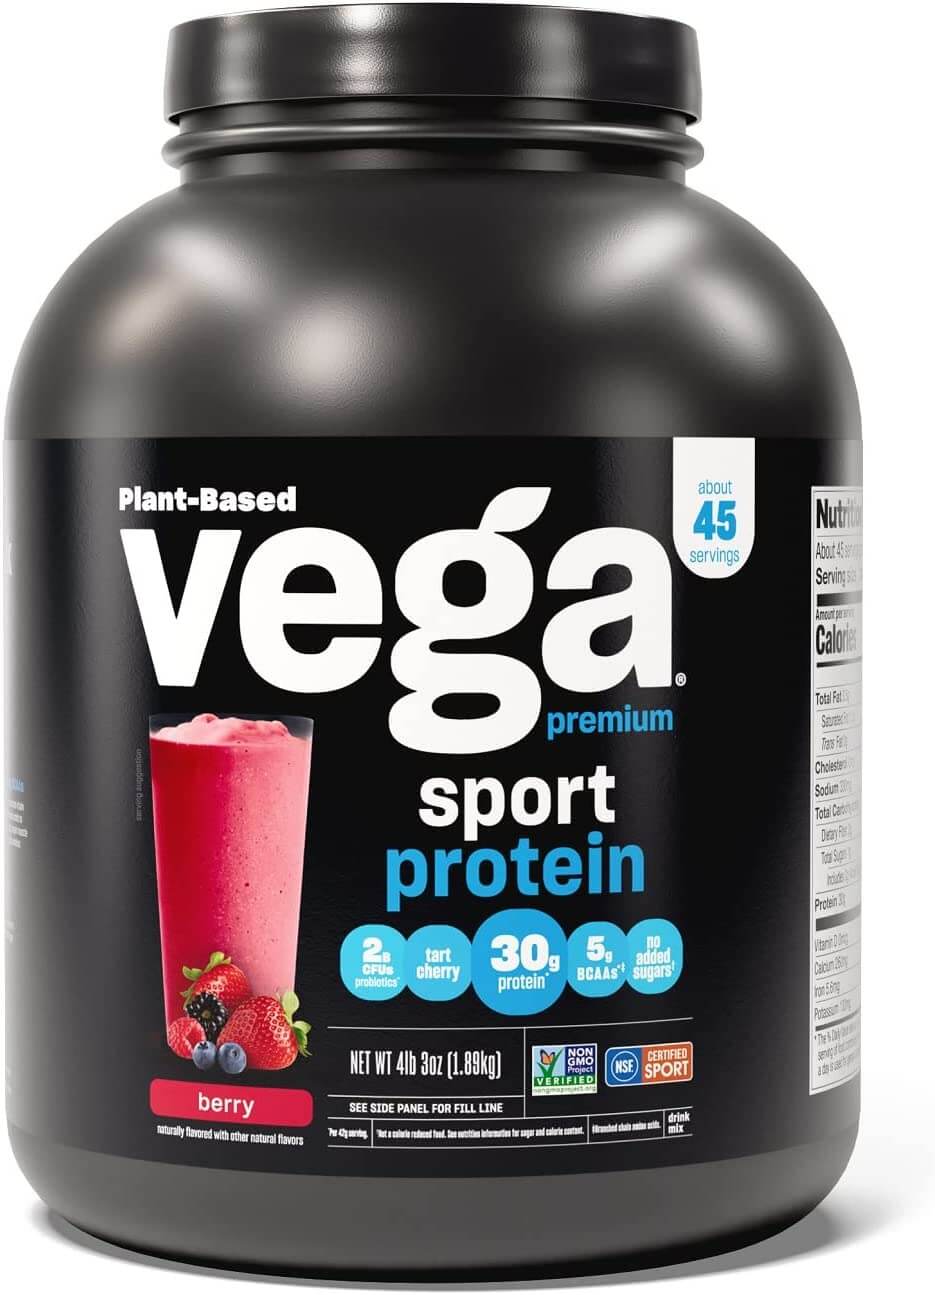 black container of vegan protein powder